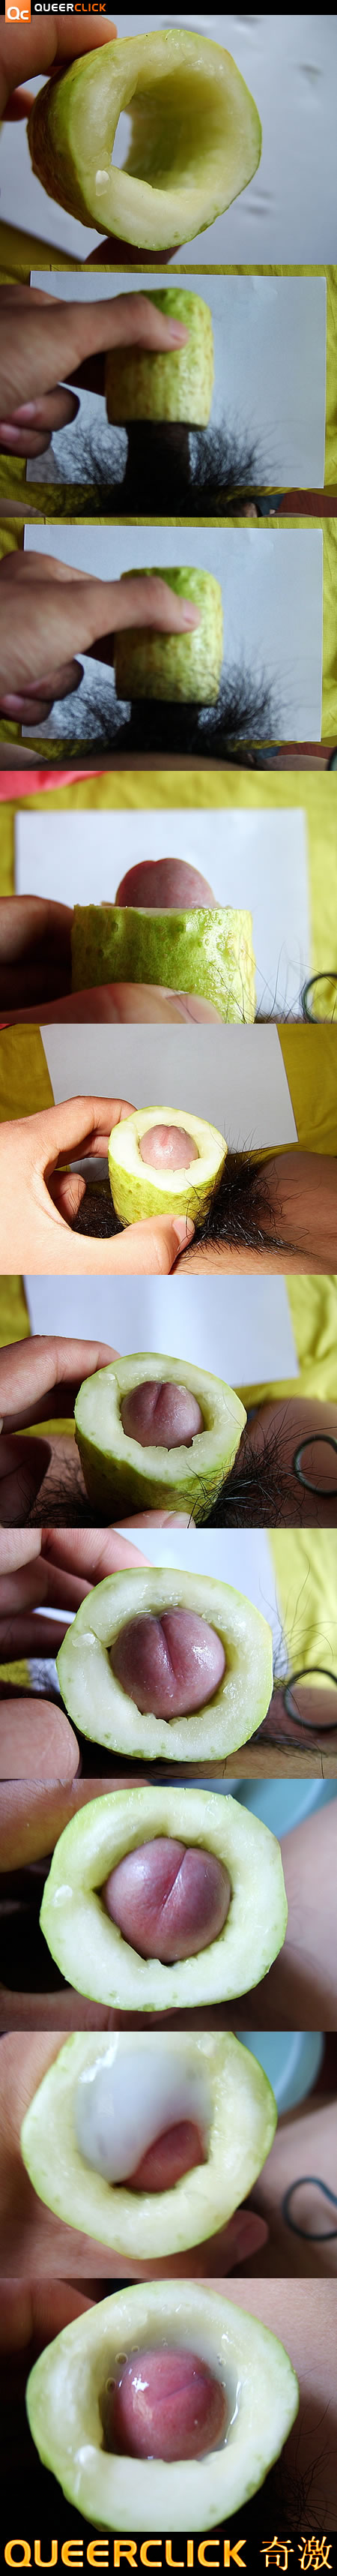 cucumber_masturbation.jpg